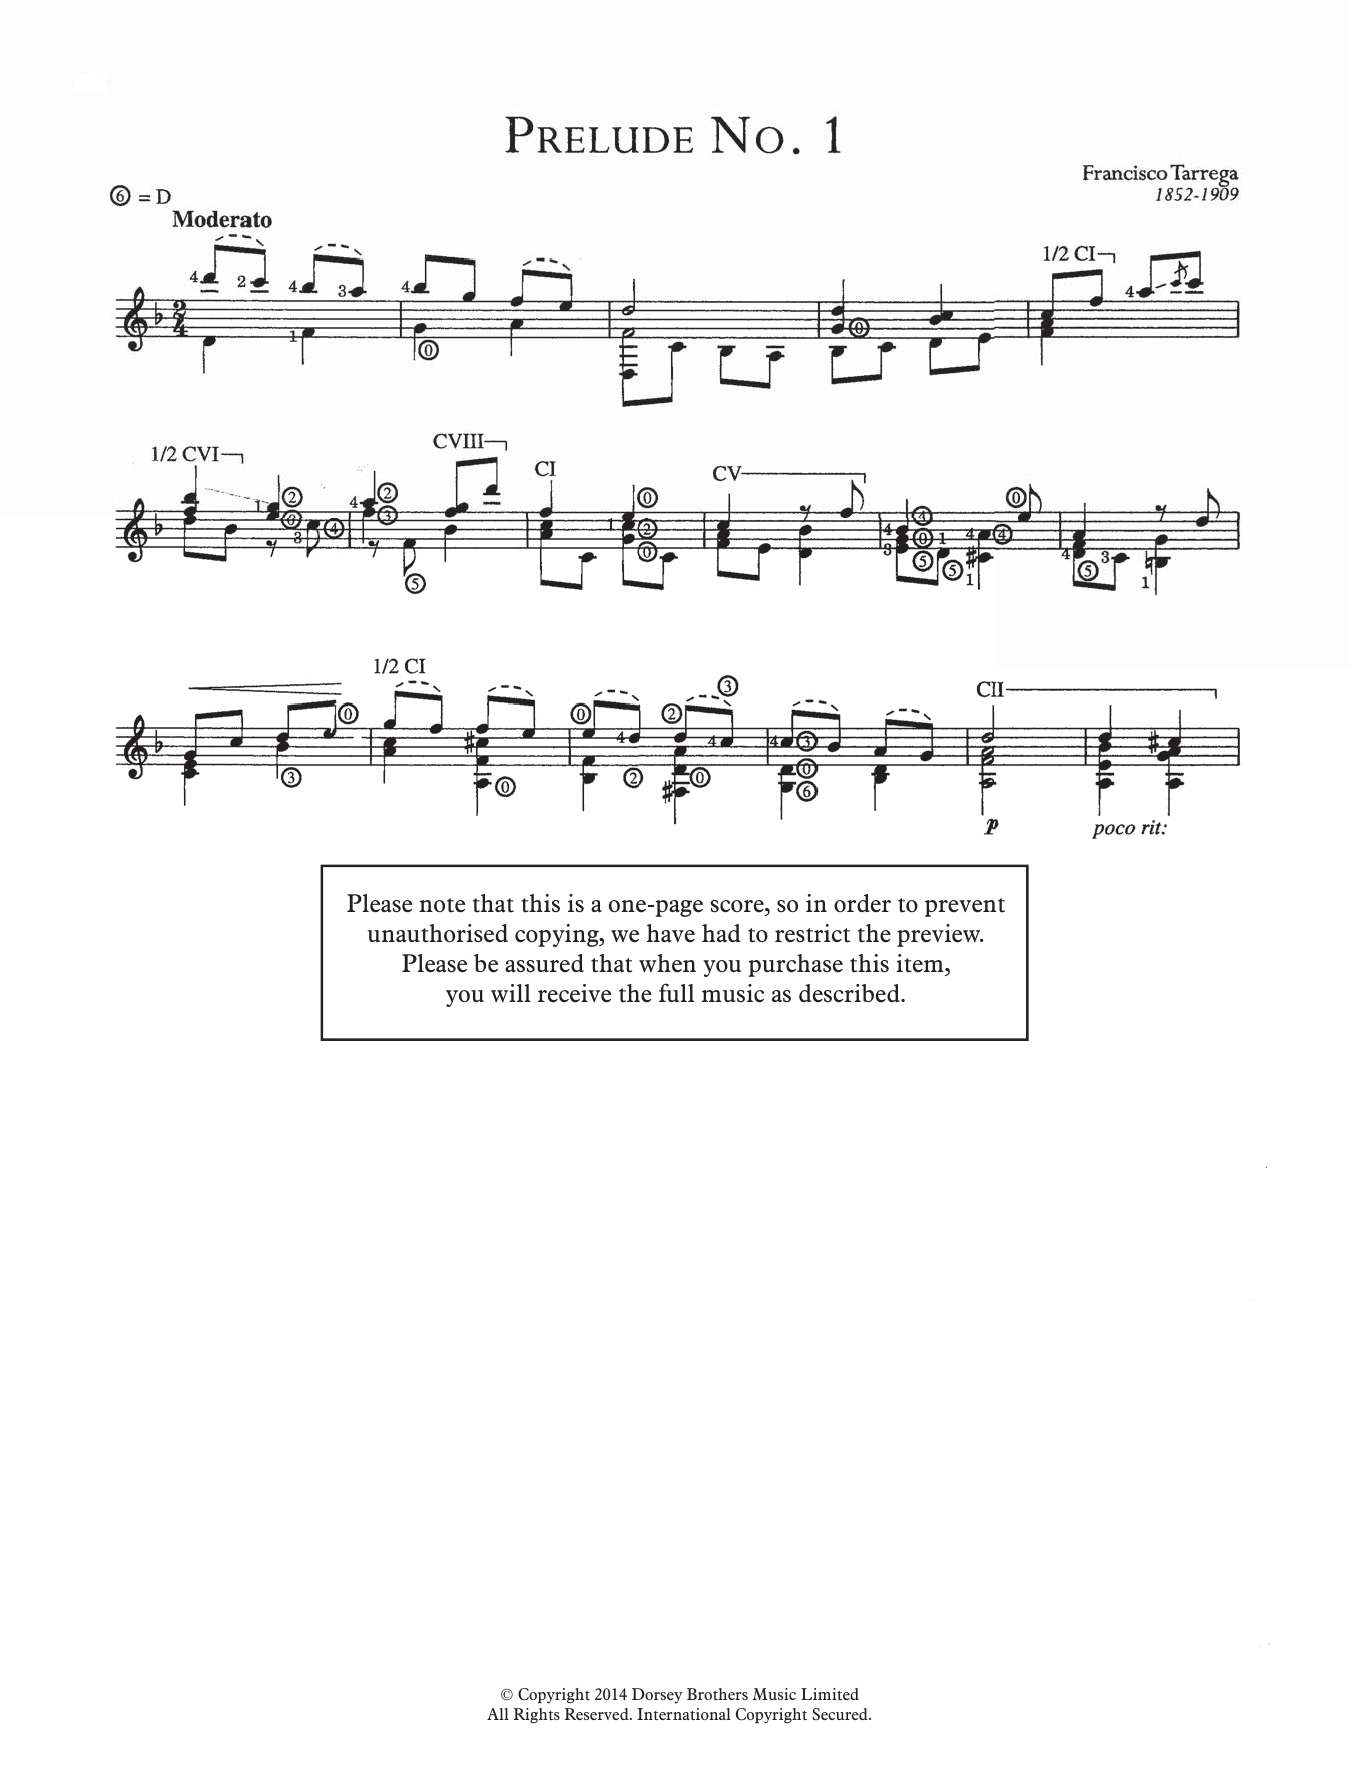 Francisco Tárrega Prelude No.1 Sheet Music Notes & Chords for Guitar - Download or Print PDF